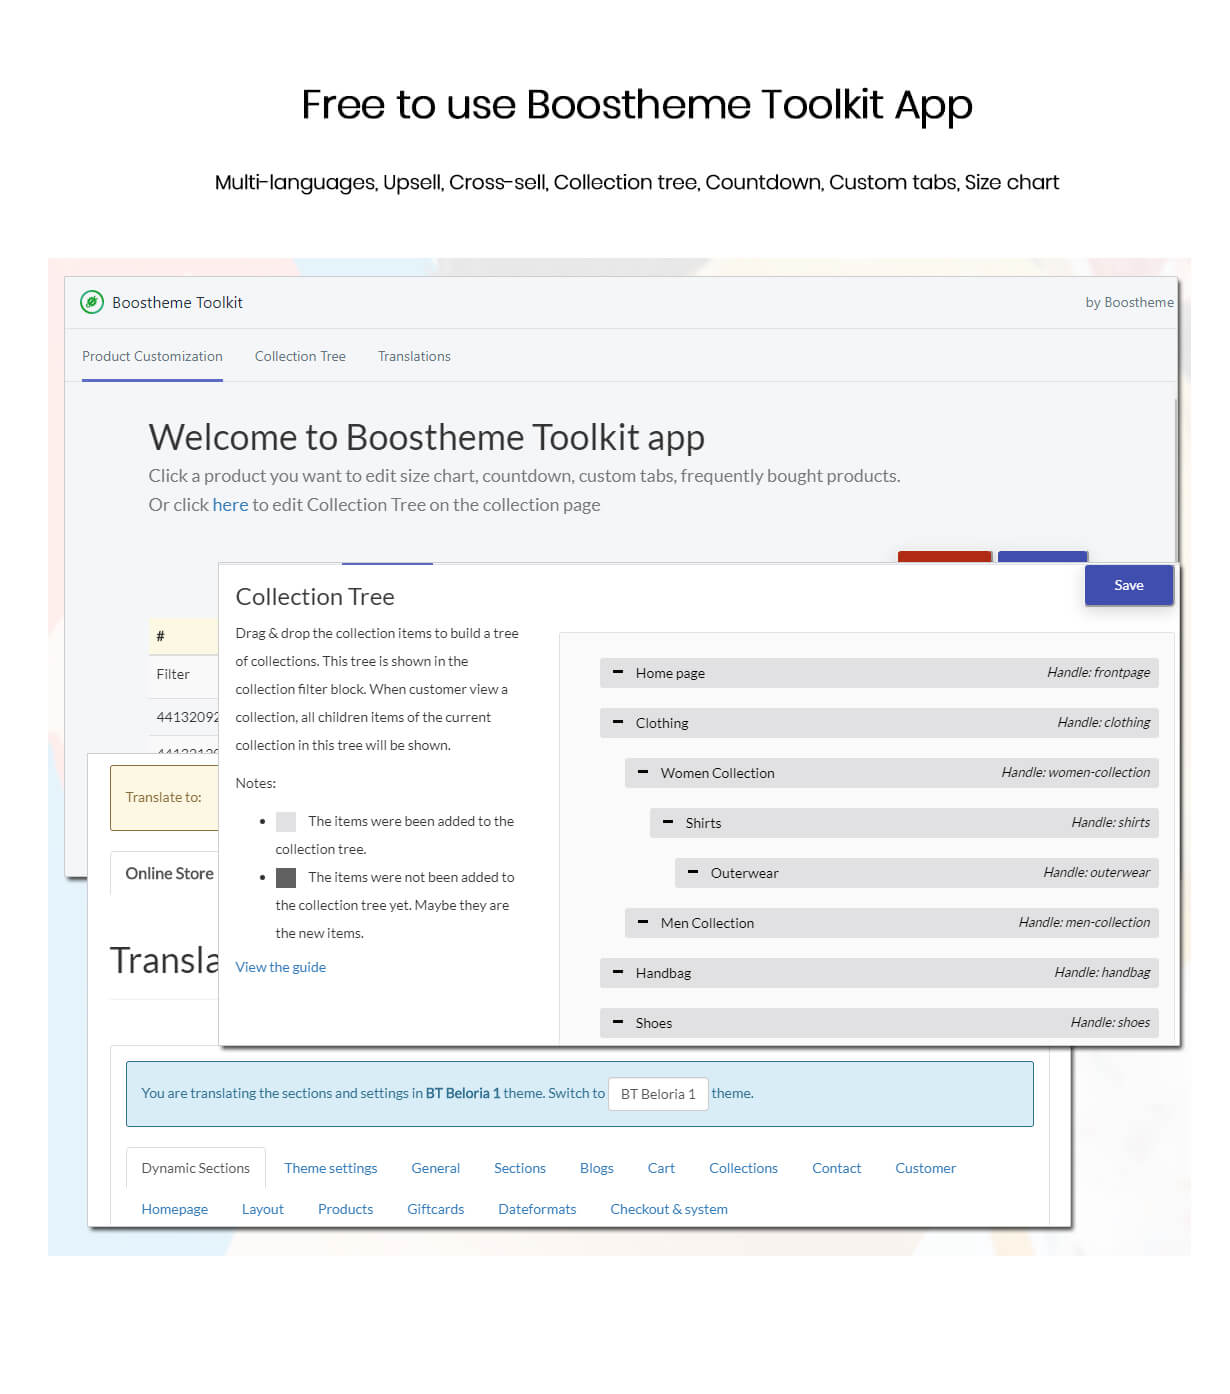 Boostheme Toolkit app